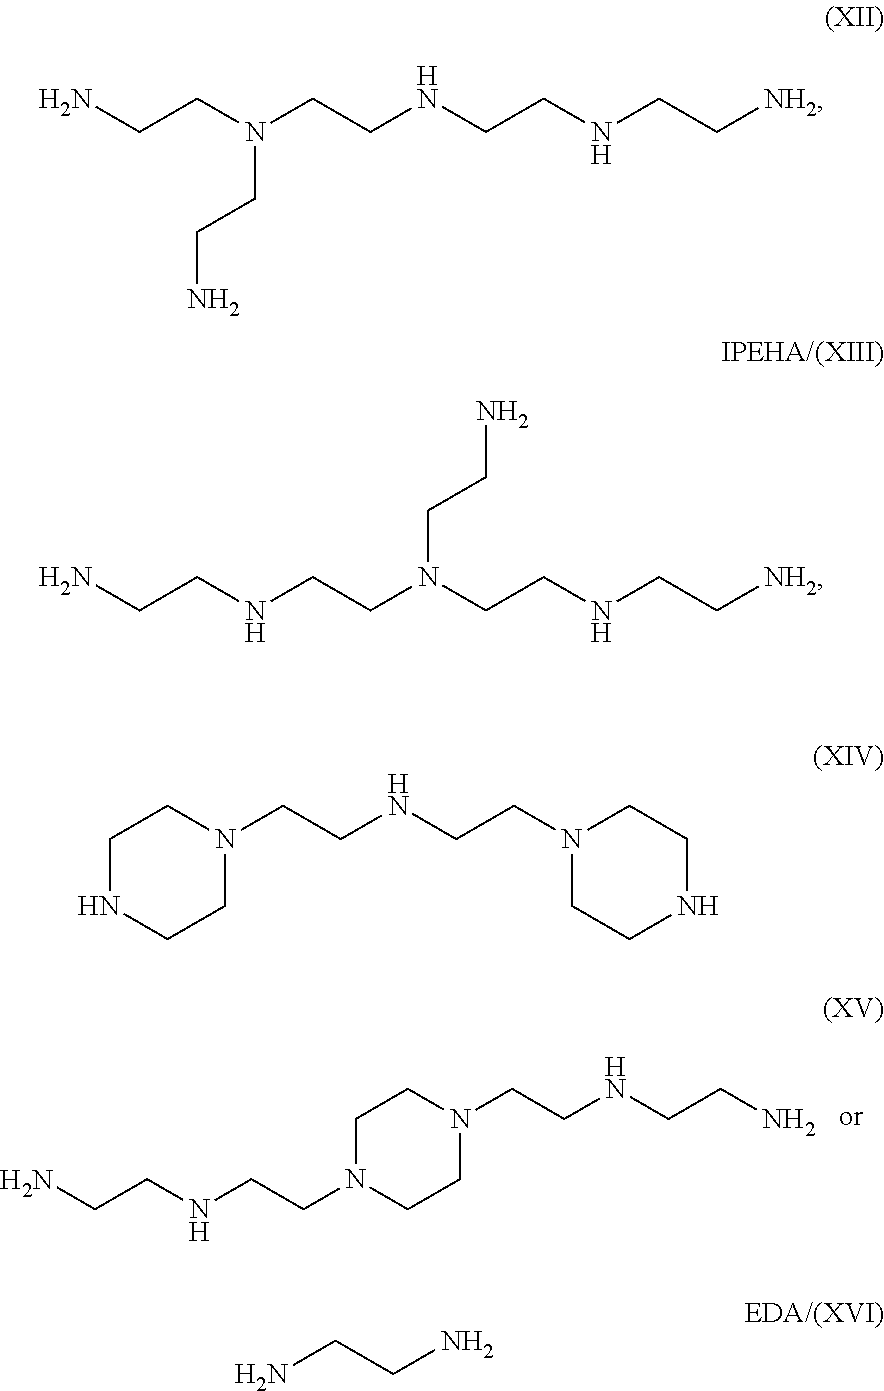 Production method for ethyleneamine mixtures